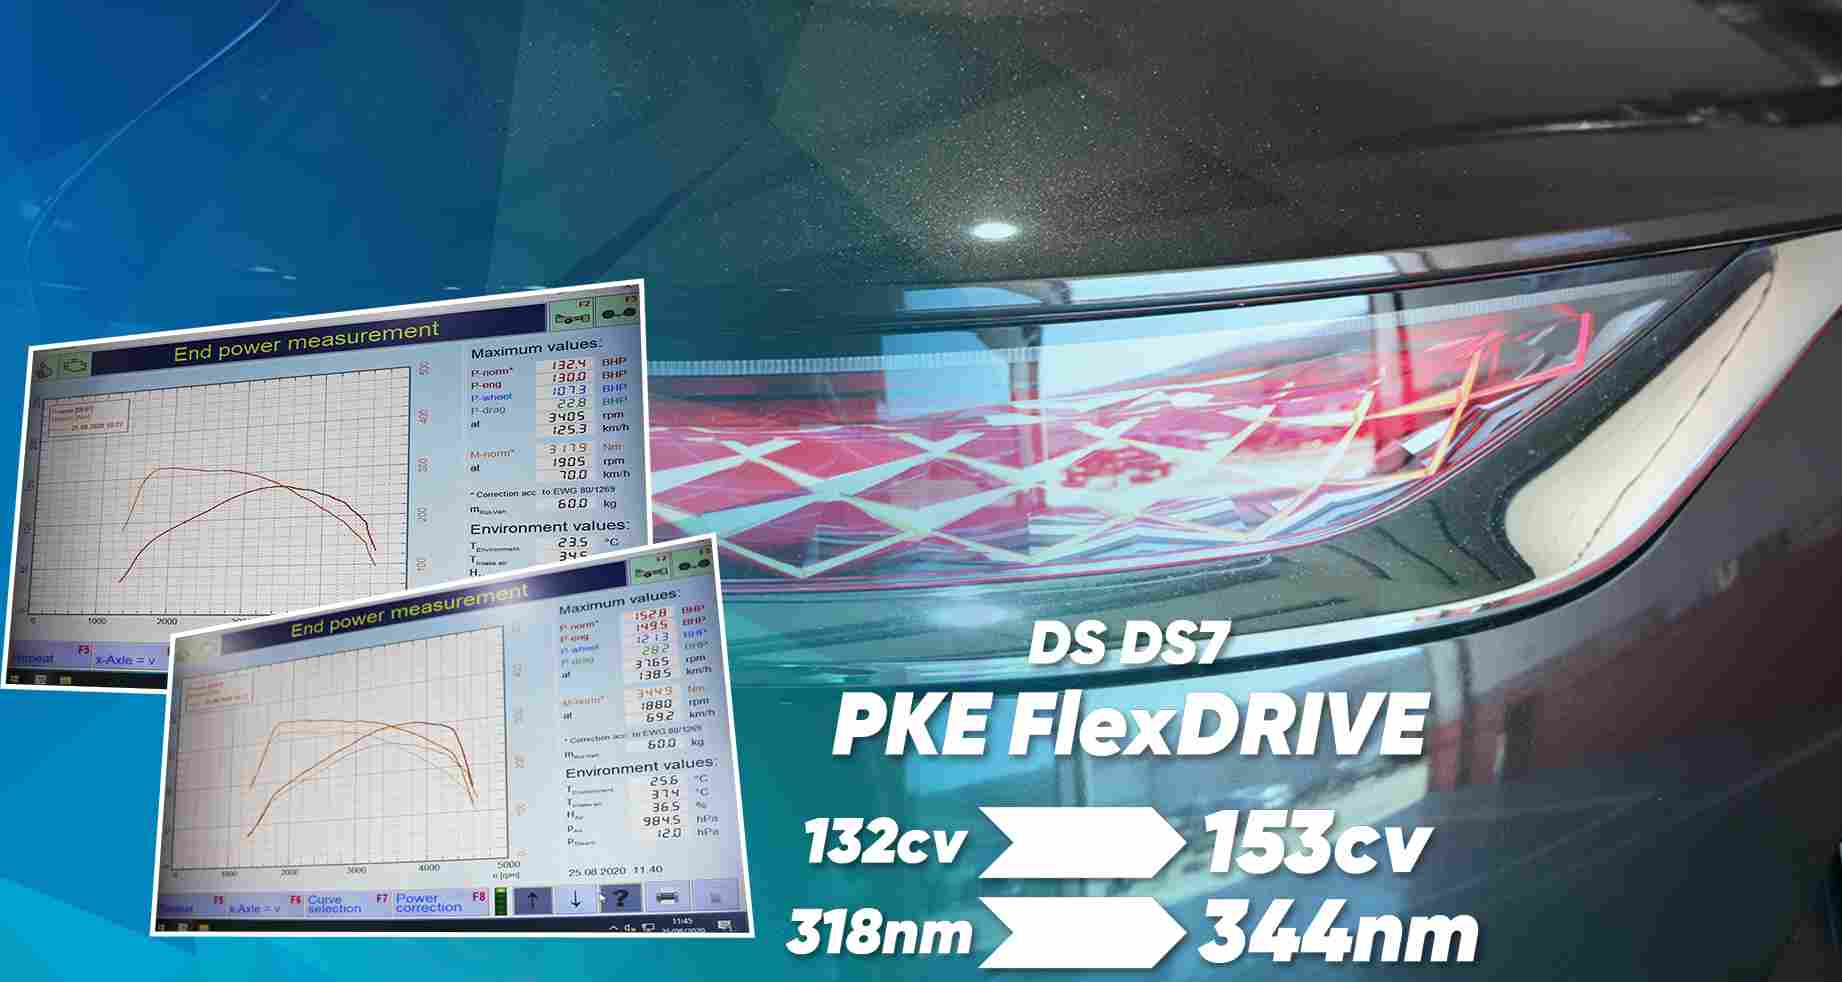 PKE FlexDRIVE - DS DS7